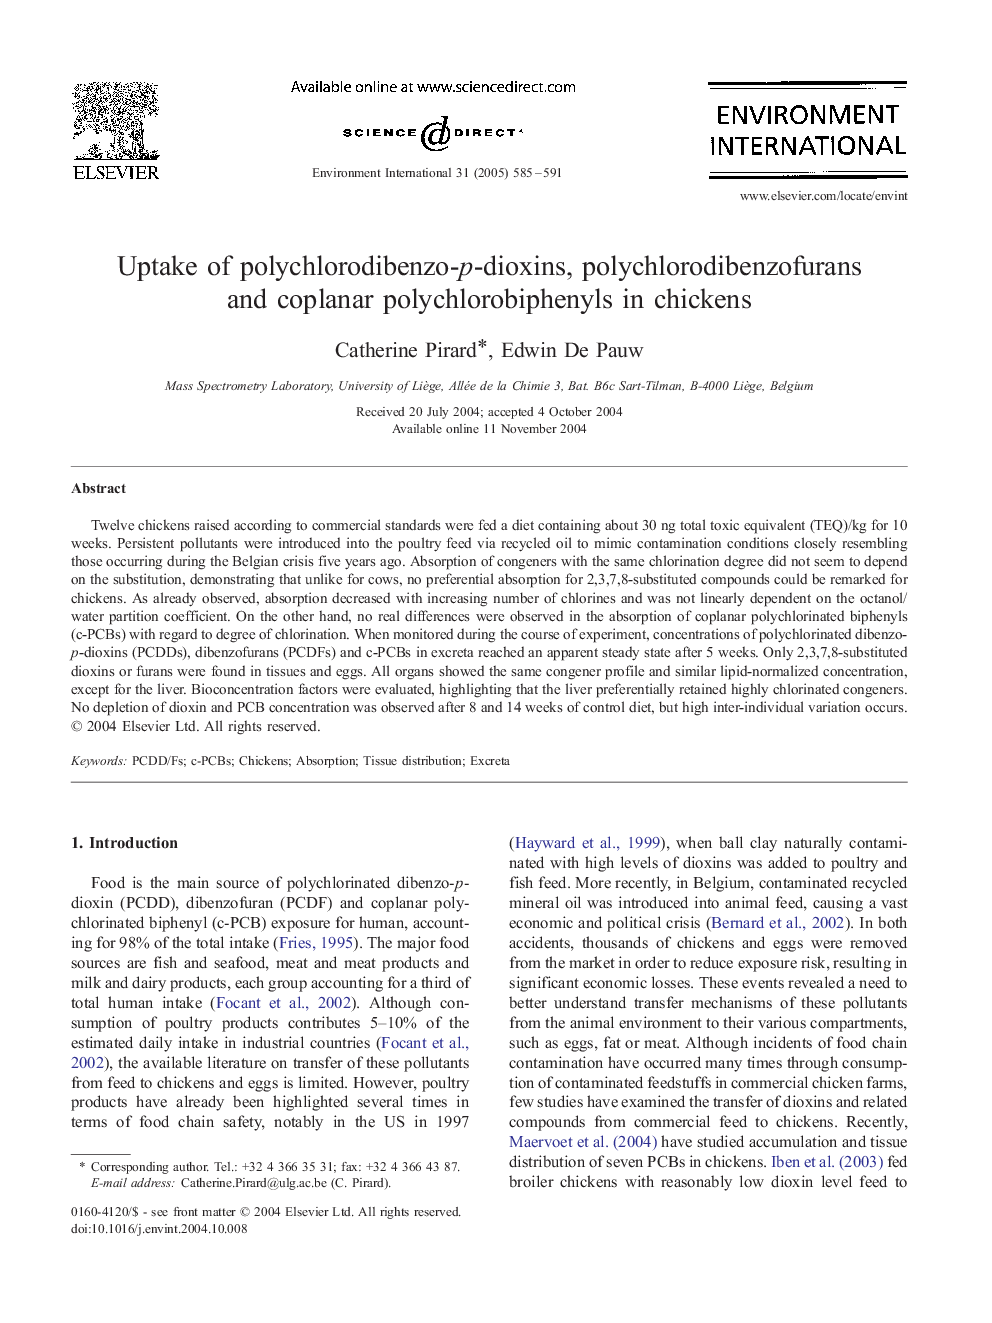 Uptake of polychlorodibenzo-p-dioxins, polychlorodibenzofurans and coplanar polychlorobiphenyls in chickens